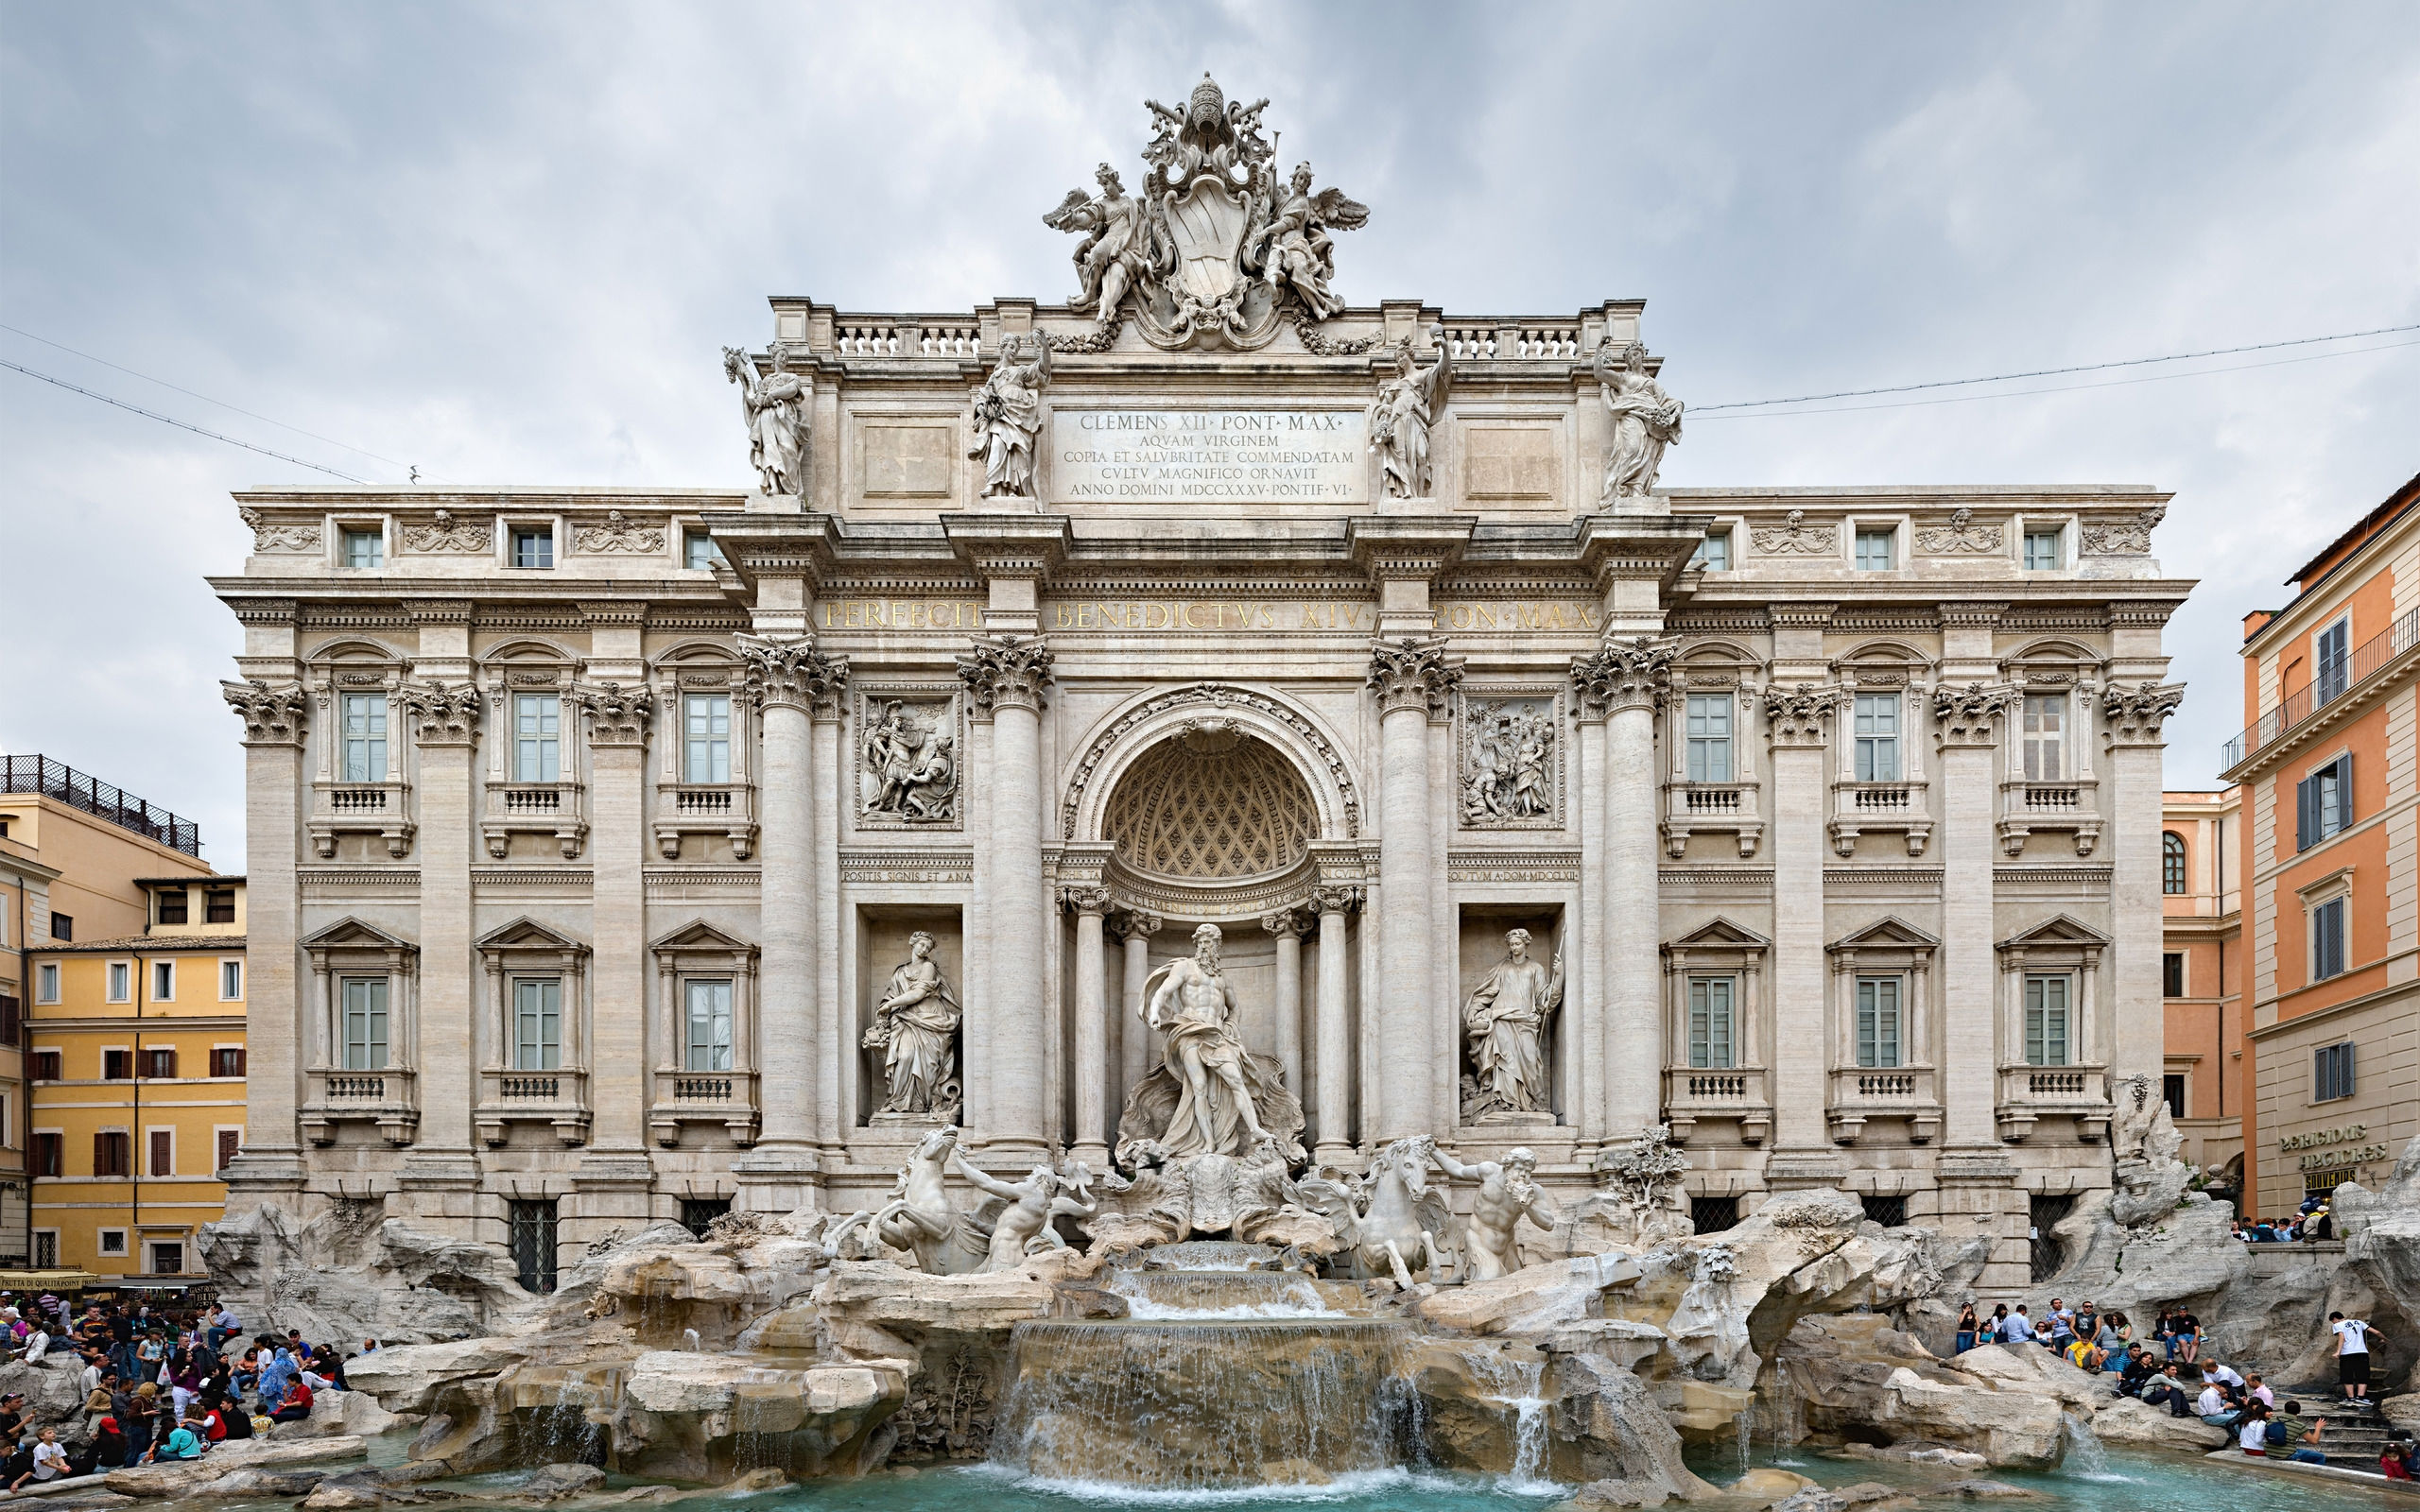 Fontana di Trevi Italy, a stunning fountain in Italy.